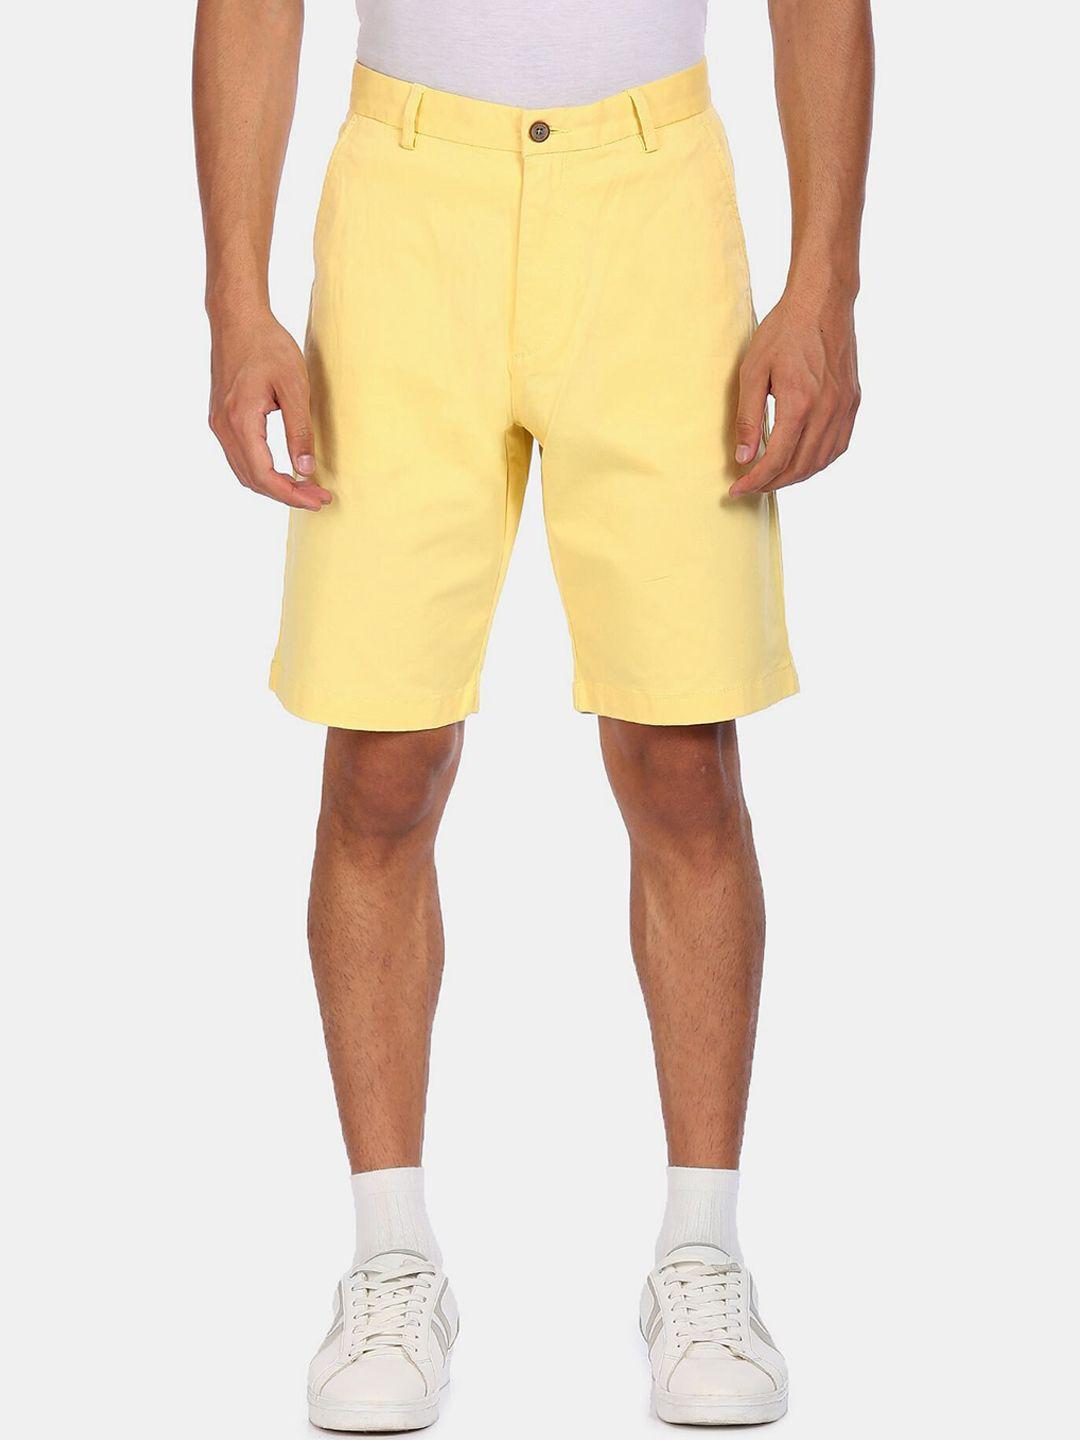 arrow-sport-men-yellow-shorts